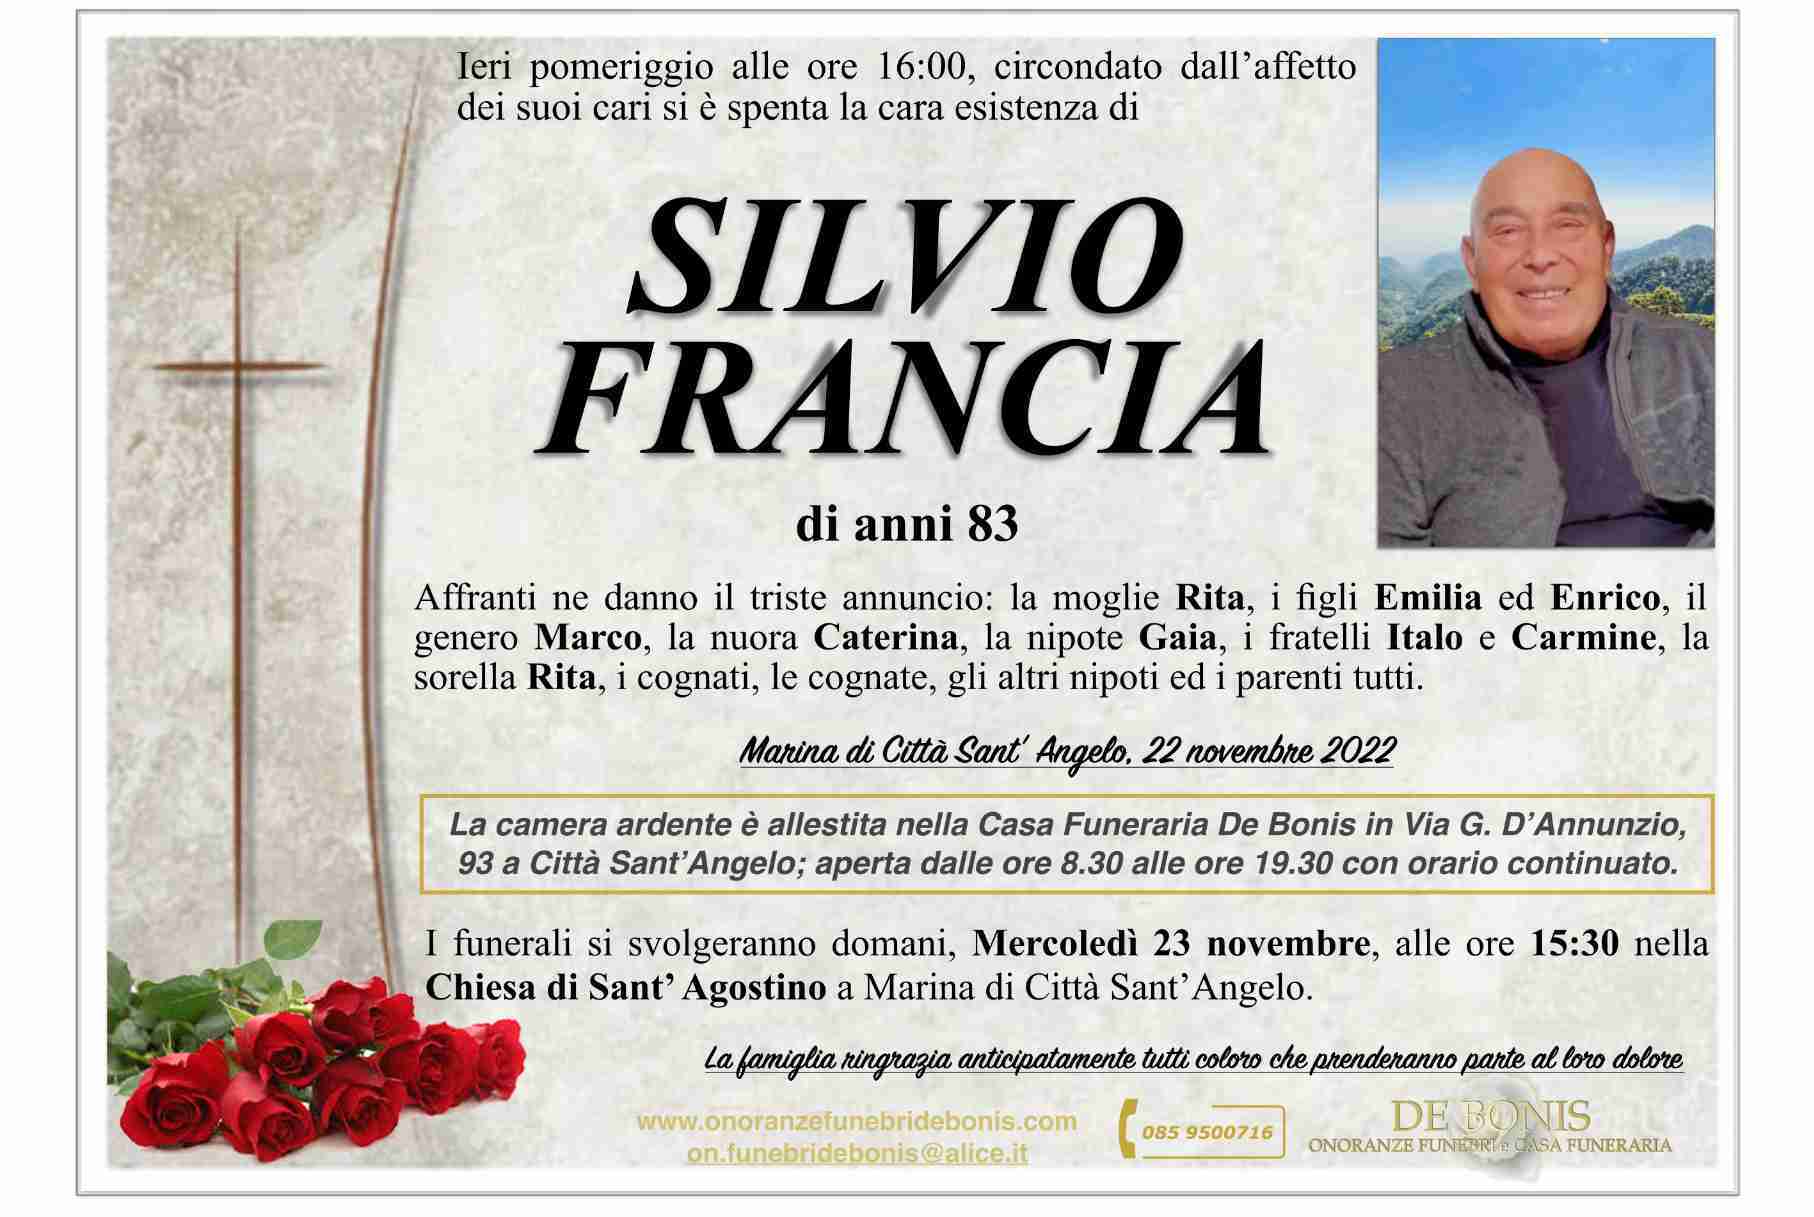 Silvio Francia